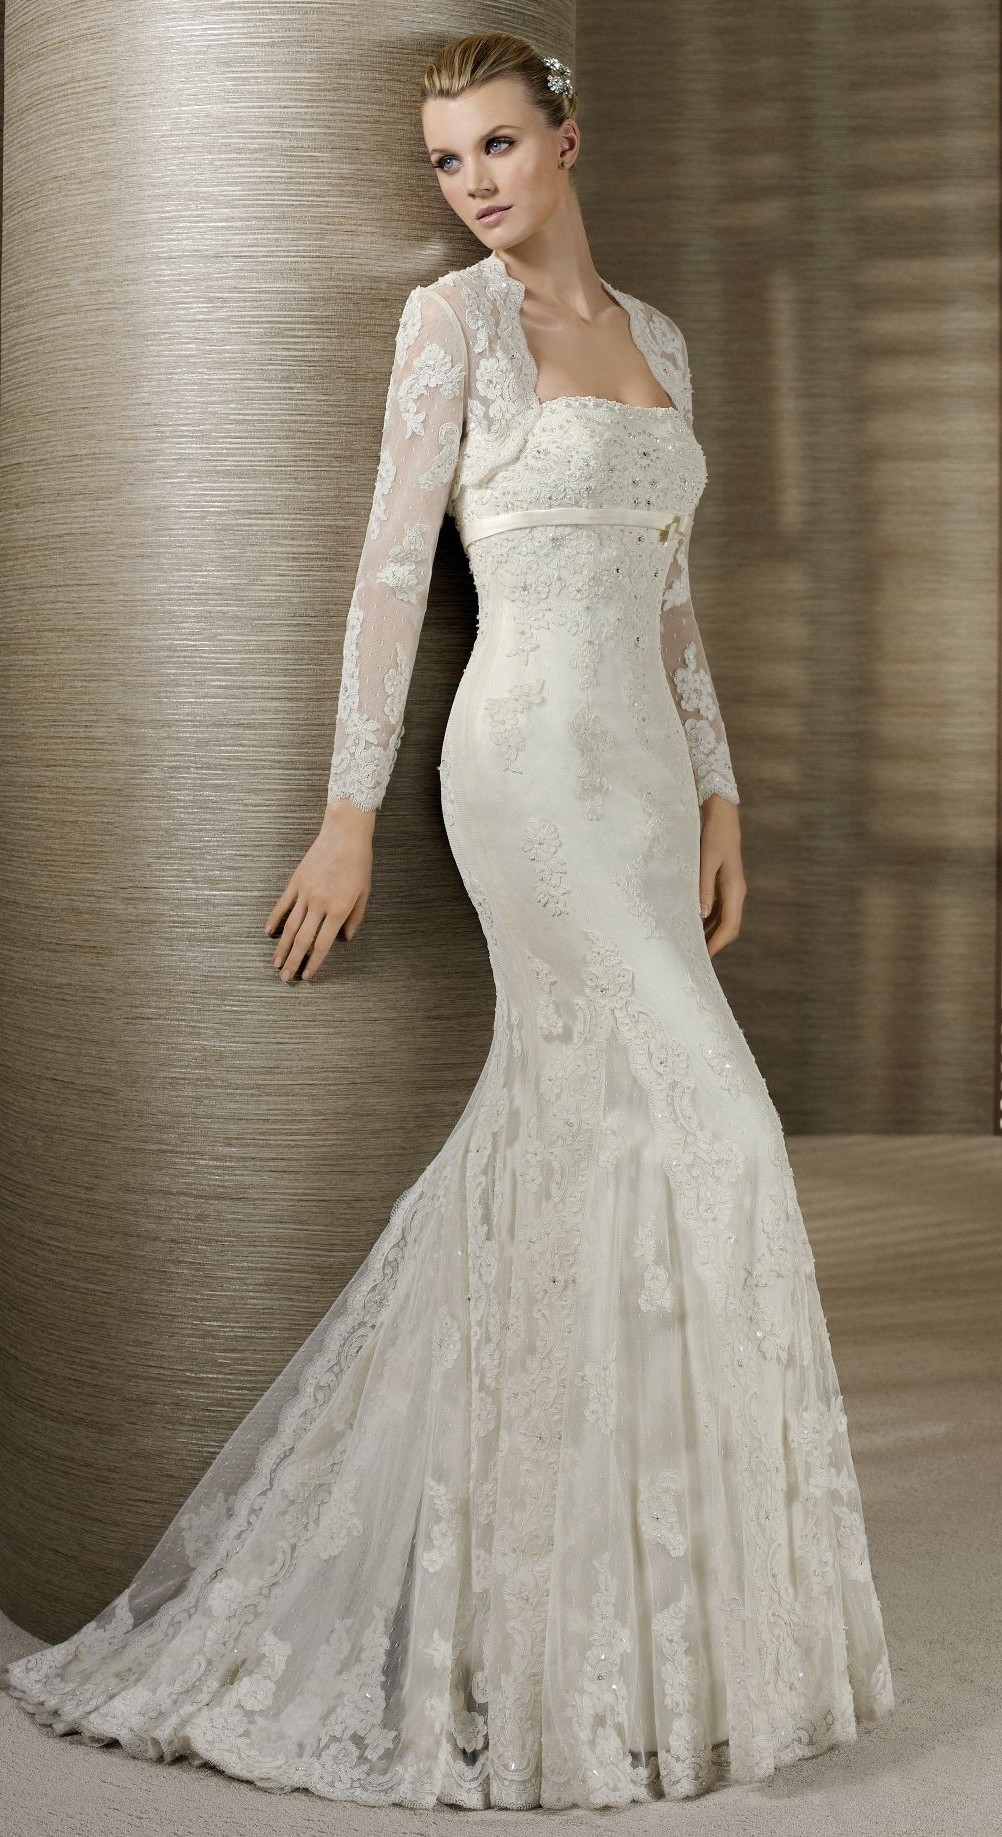 elegant wedding dress ideas